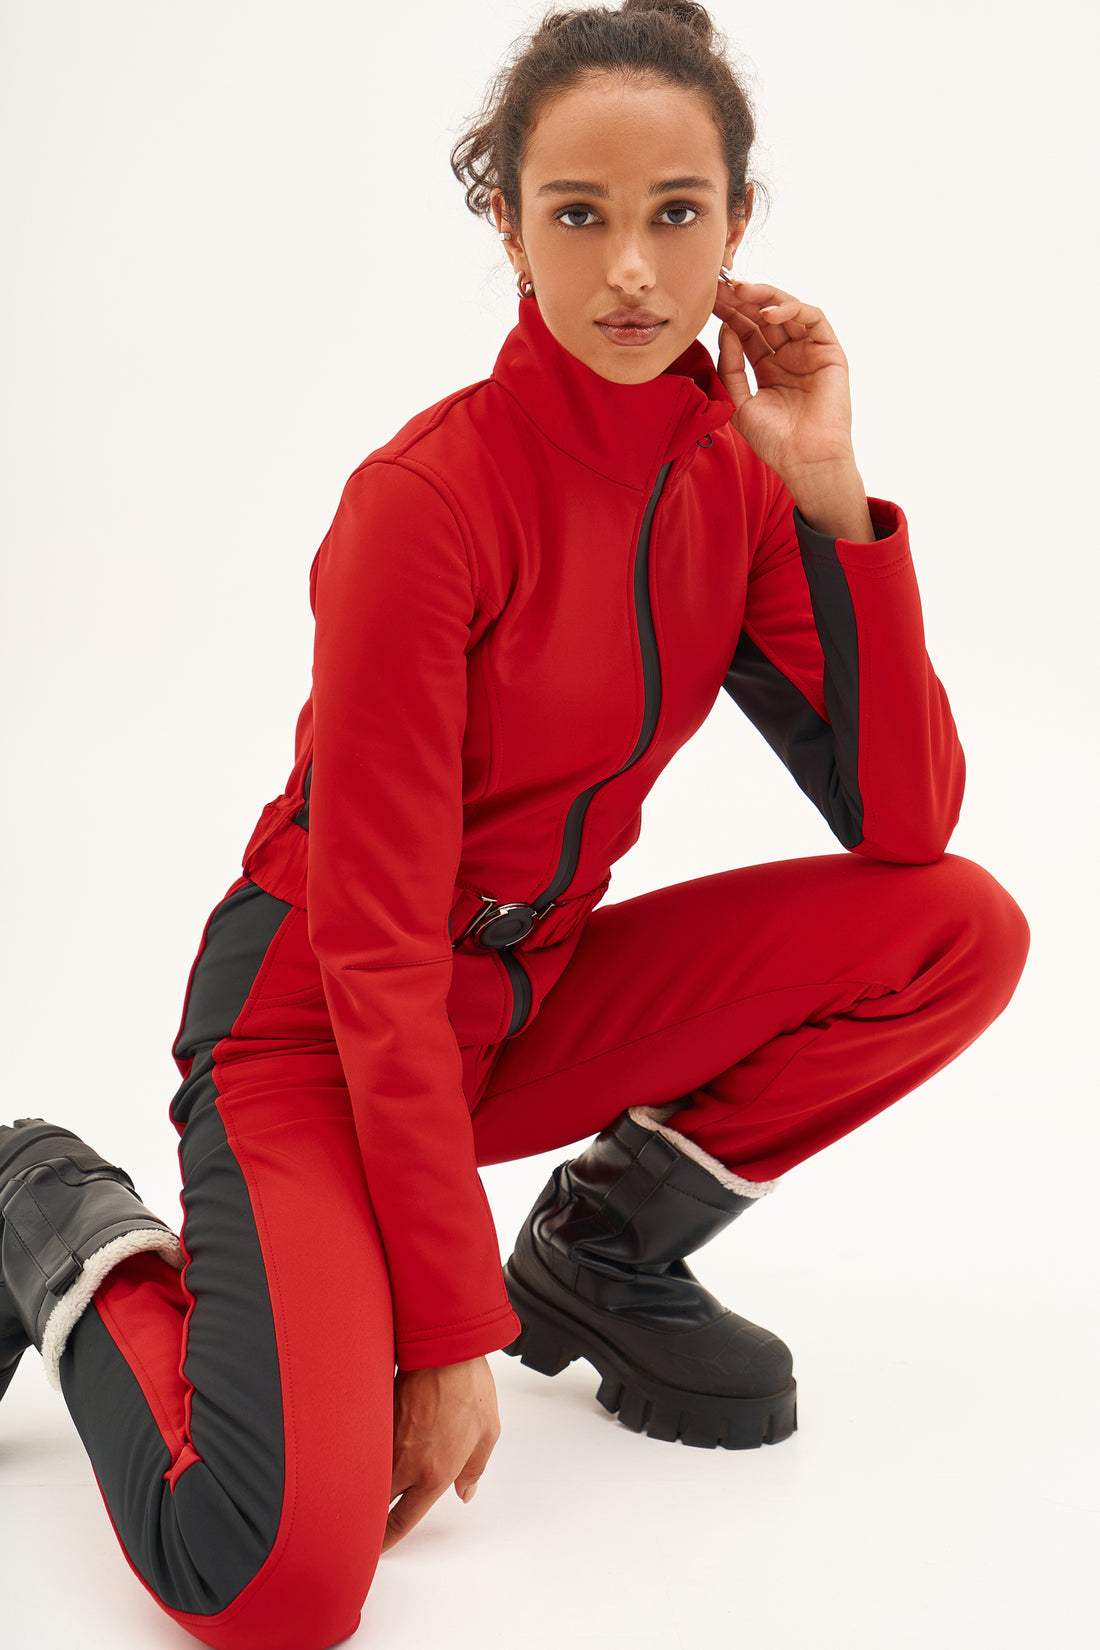 Skinny ski wear for women REMBRA - RED with black stripes Ski apparel for ski trip vacation